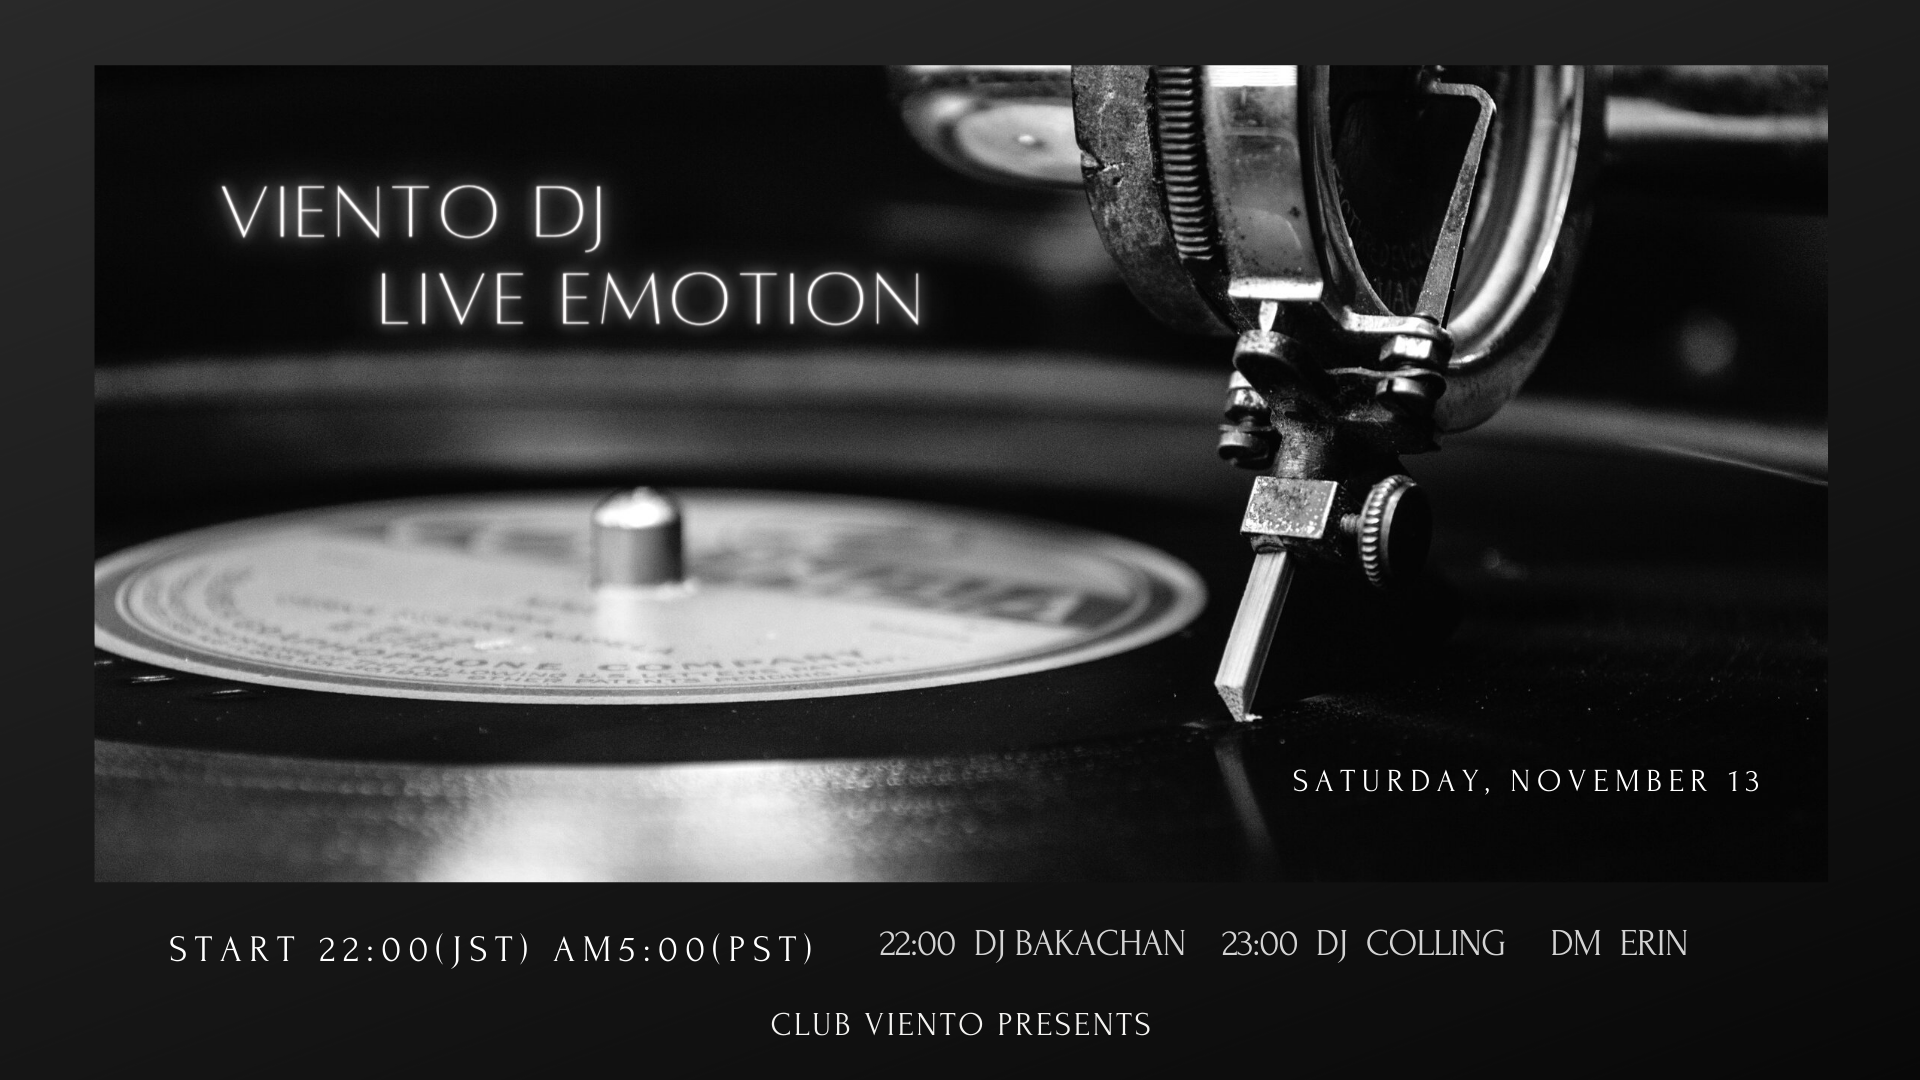 Viento DJ Live Emotion! Is Over!